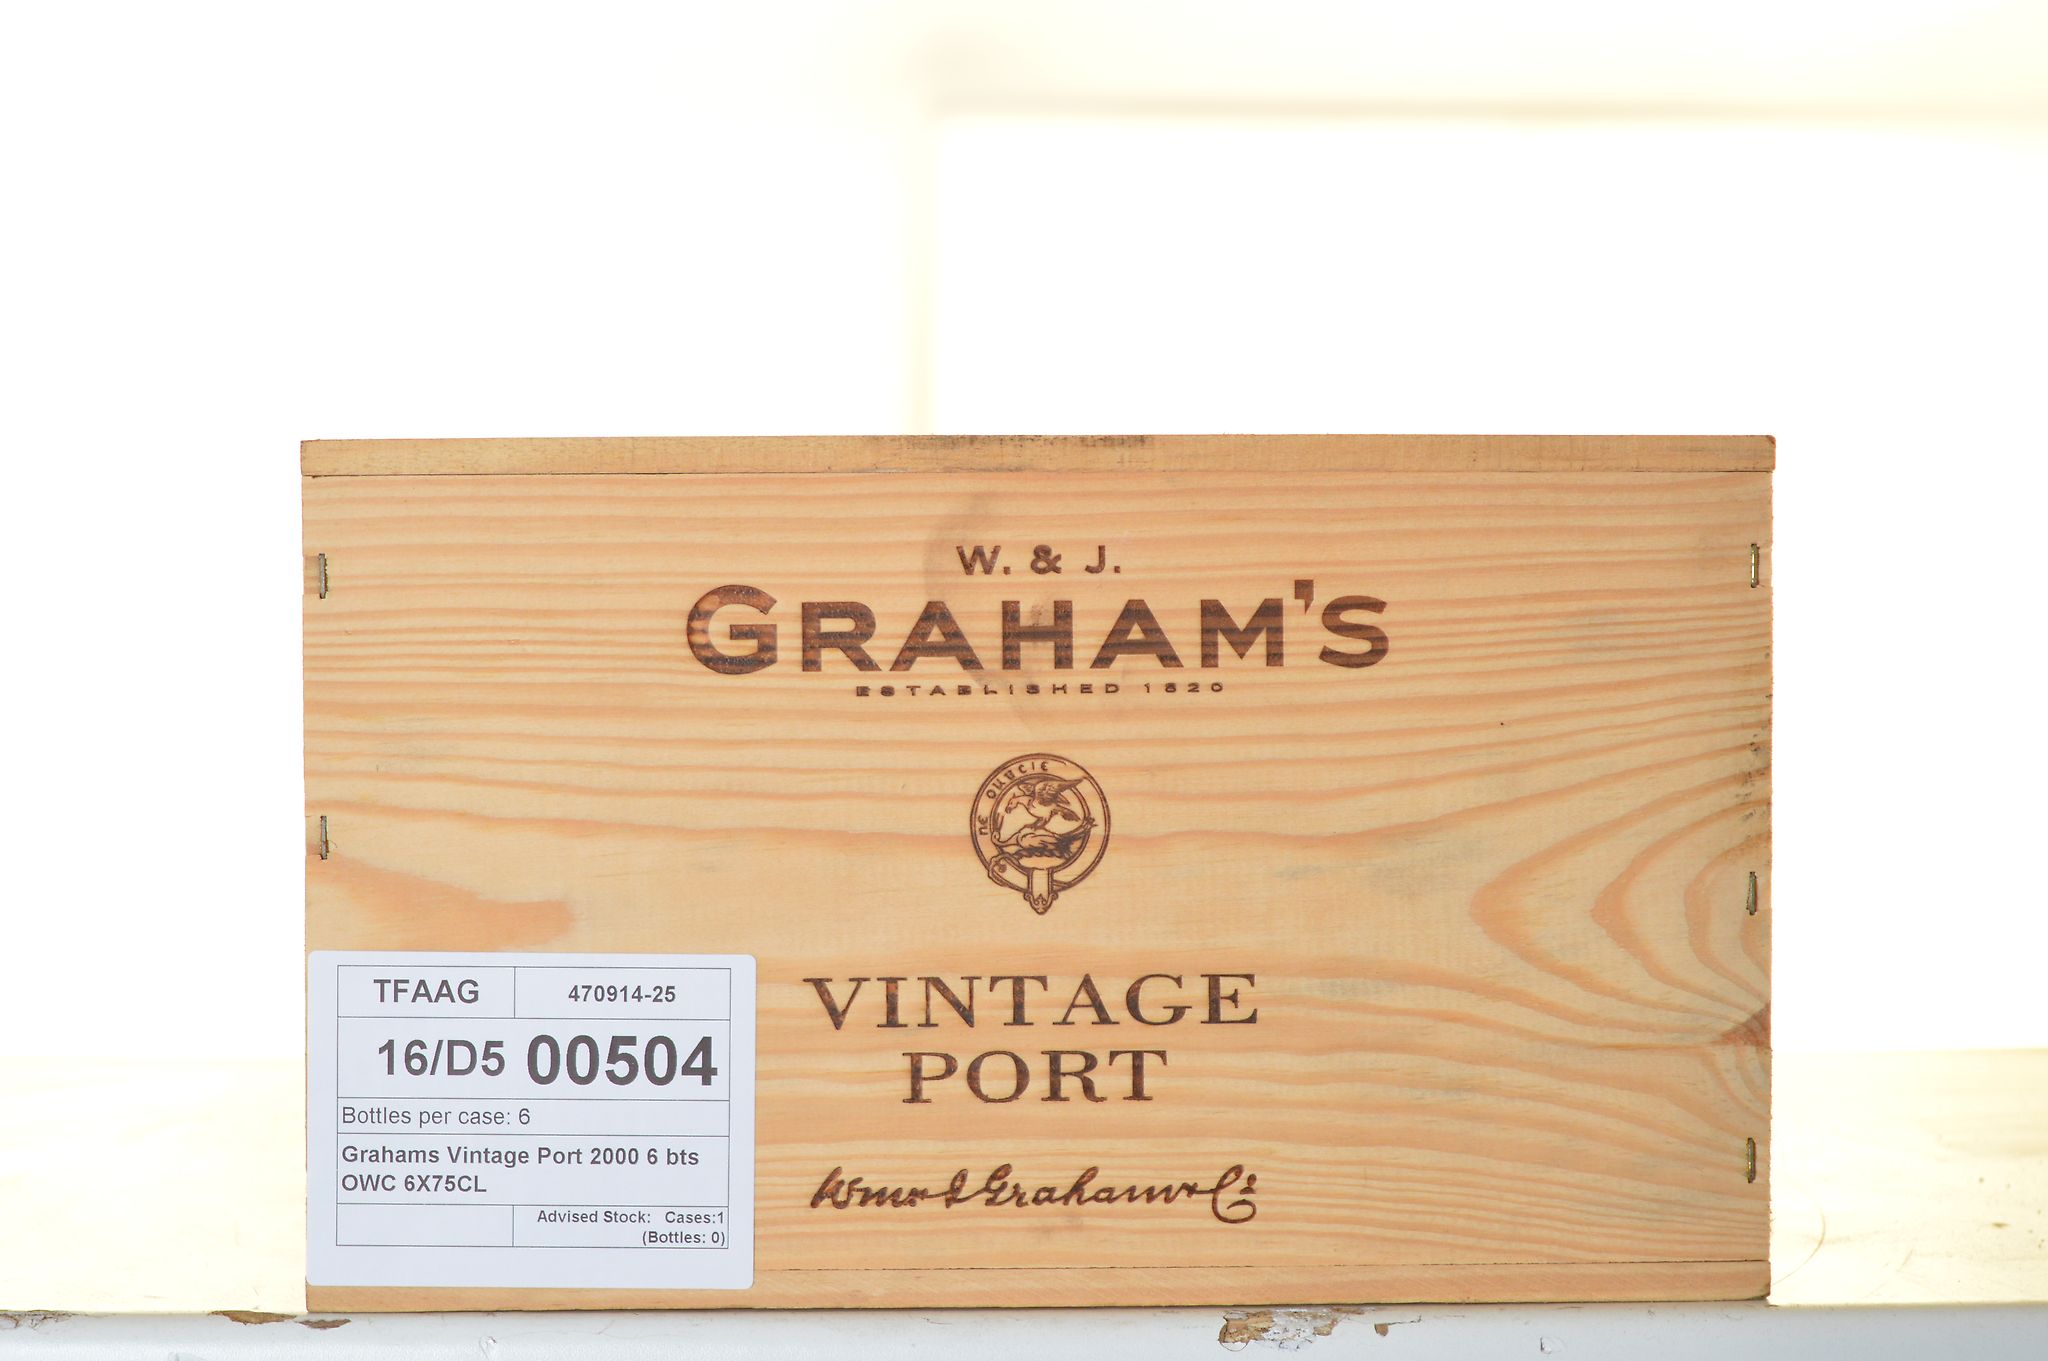 Grahams Vintage Port 2000 6 bts OWC